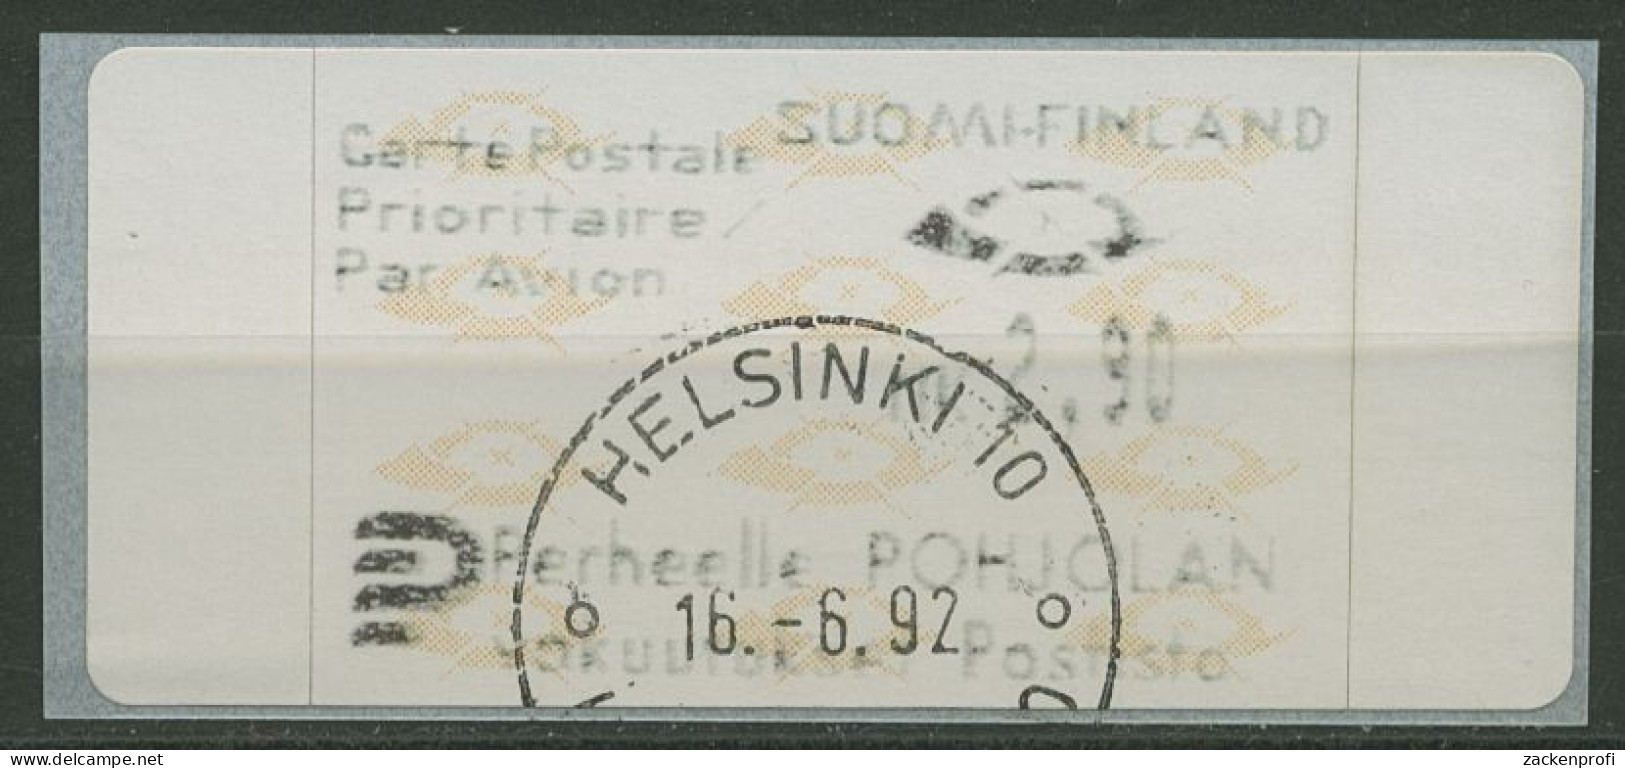 Finnland Automatenmarken 1992 Posthörner Einzelwert ATM 12.3 Z3 Gestempelt - Viñetas De Franqueo [ATM]